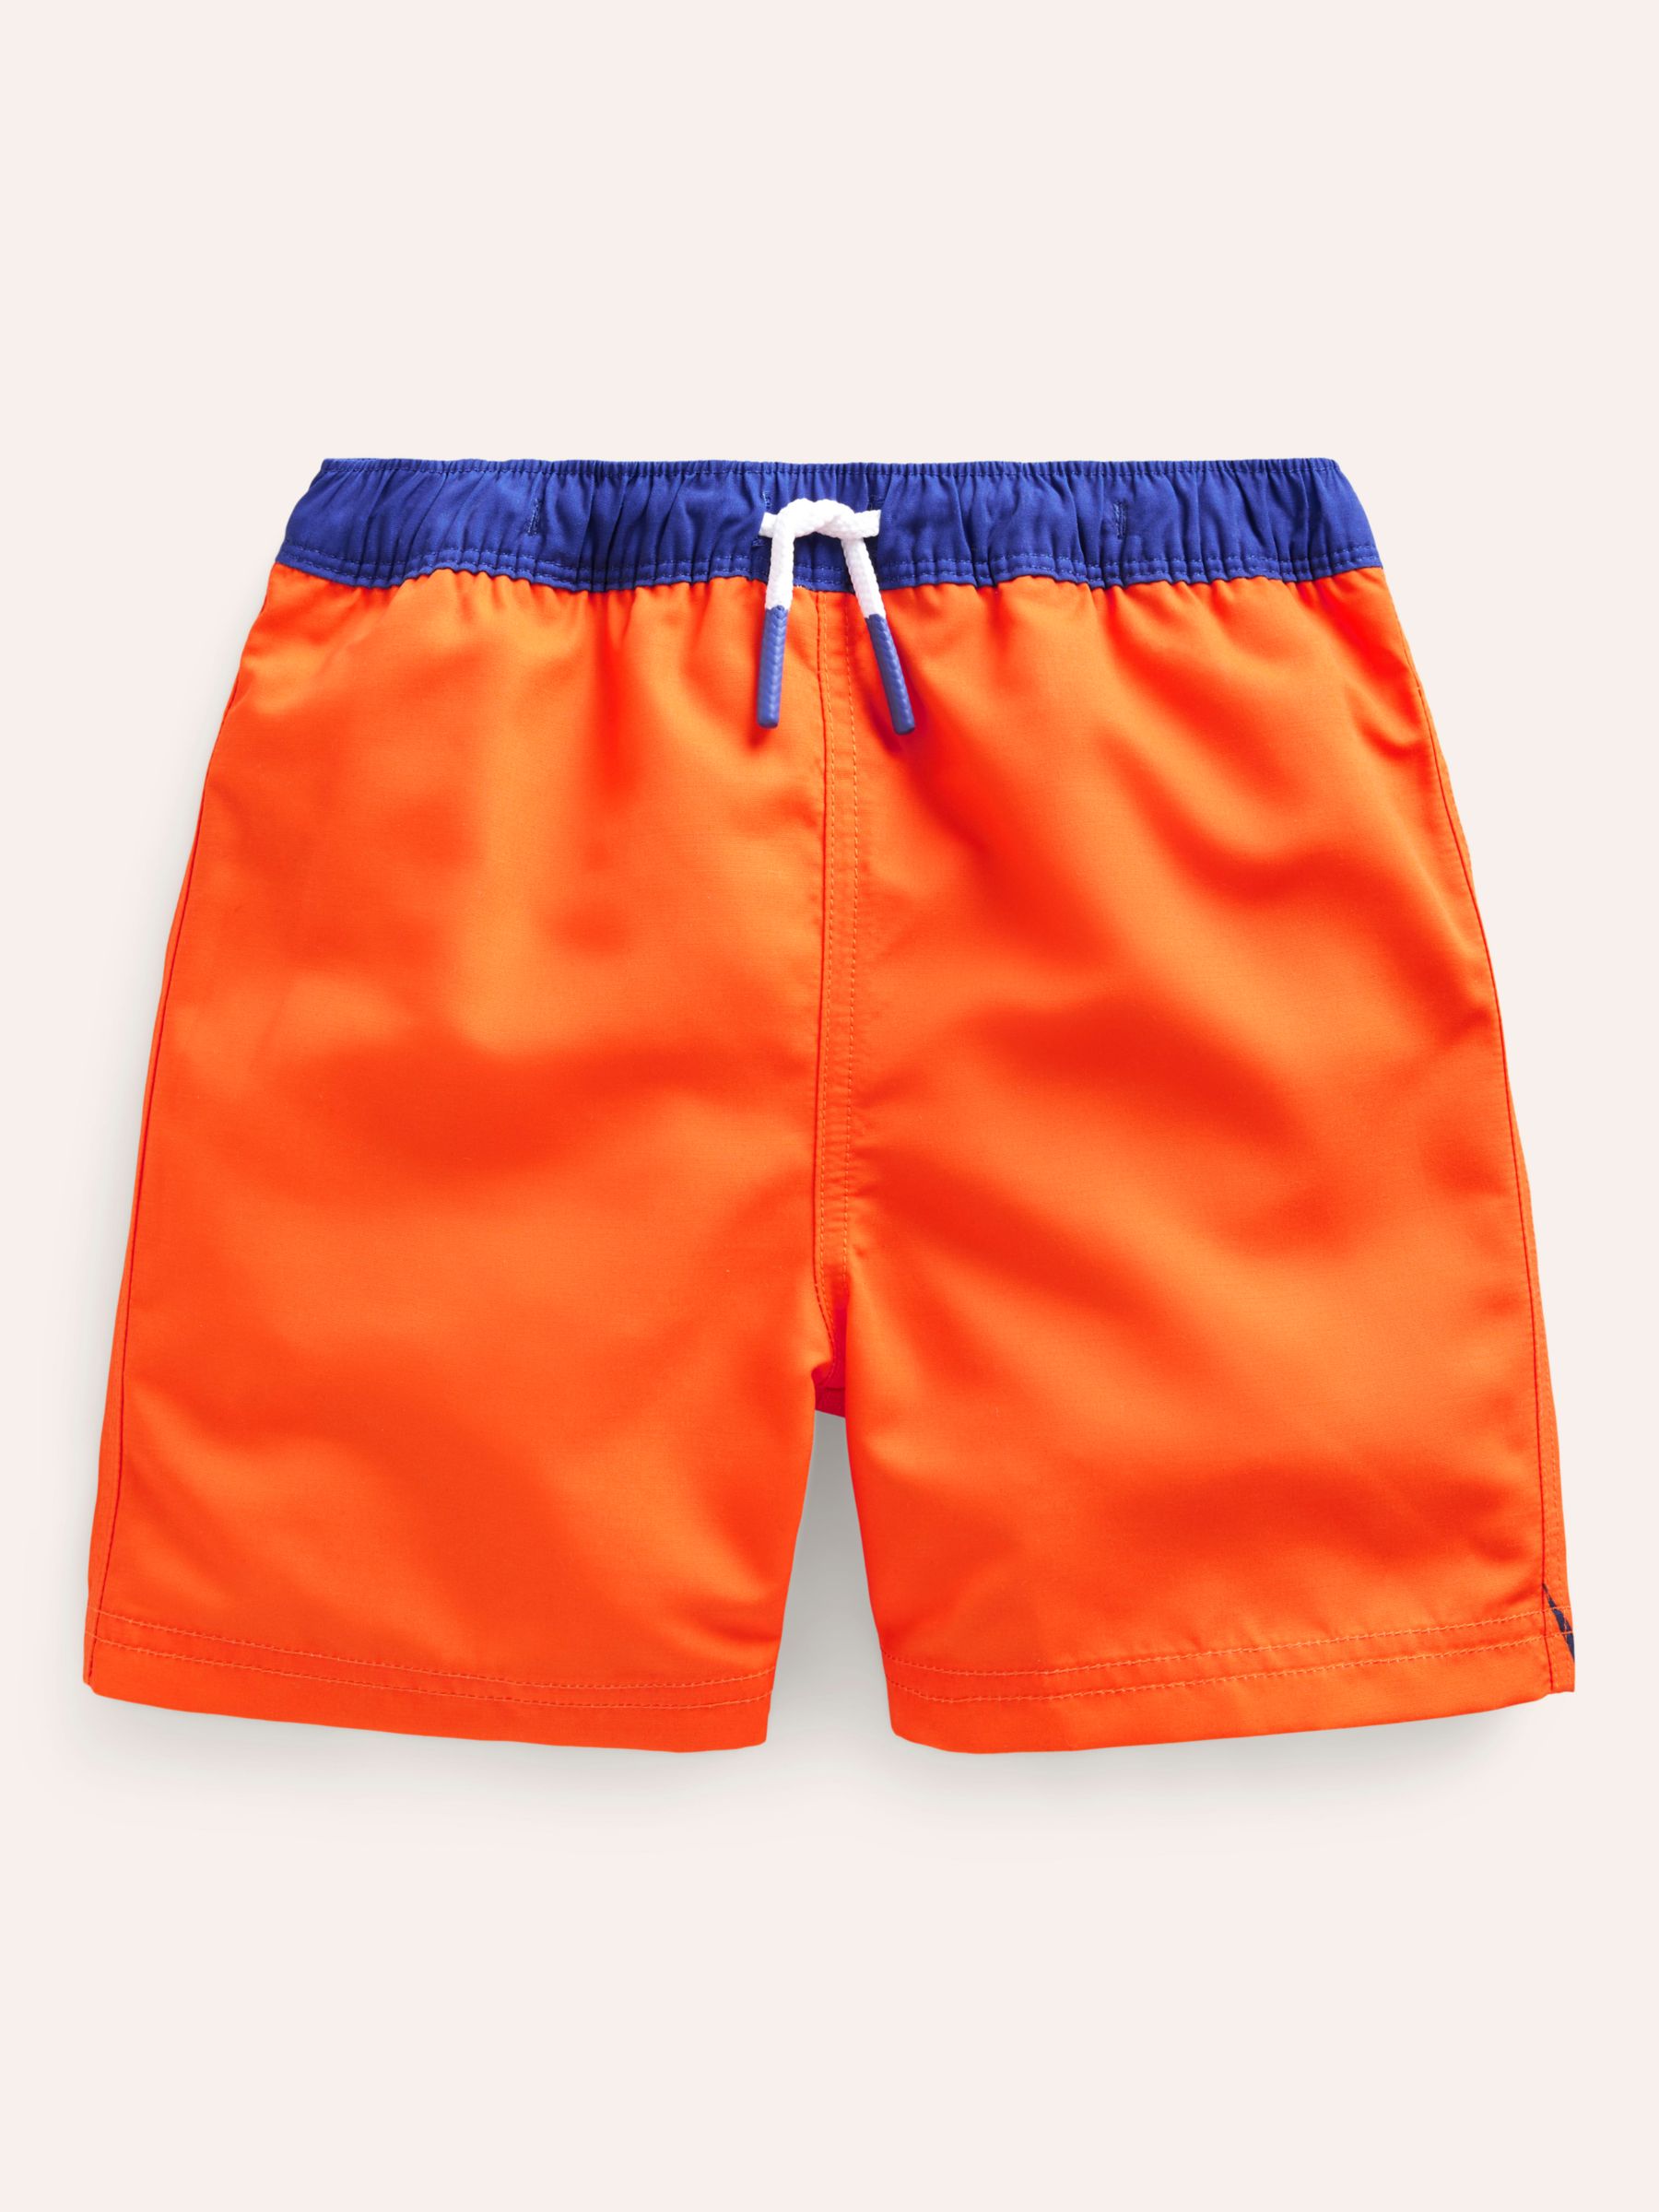 Mini Boden Kids' Tiger Swim Shorts, Mandarin, 2-3 years